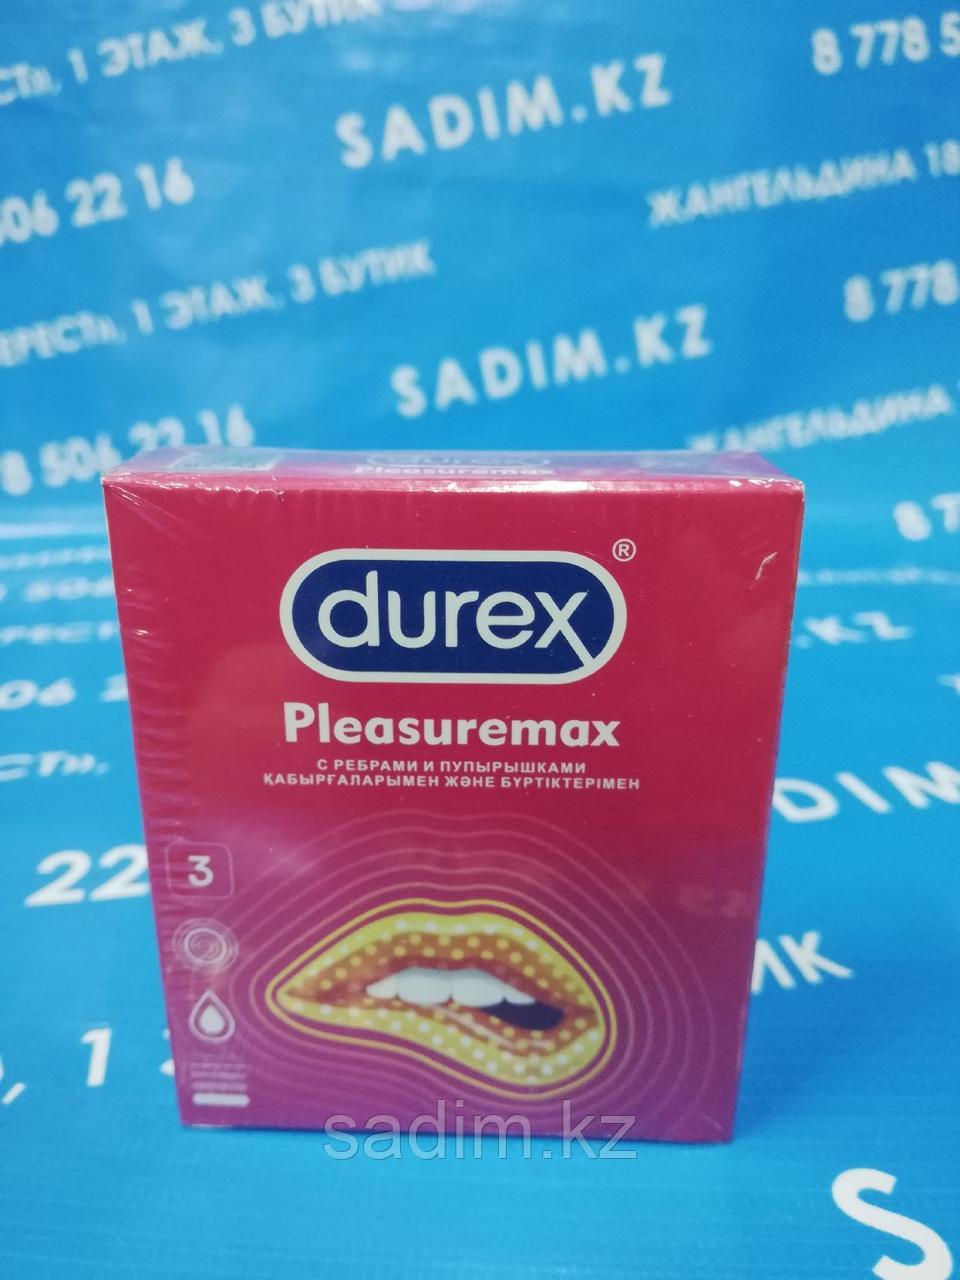 Презервативы Durex Pleasuremax с ребрами и пупырышками